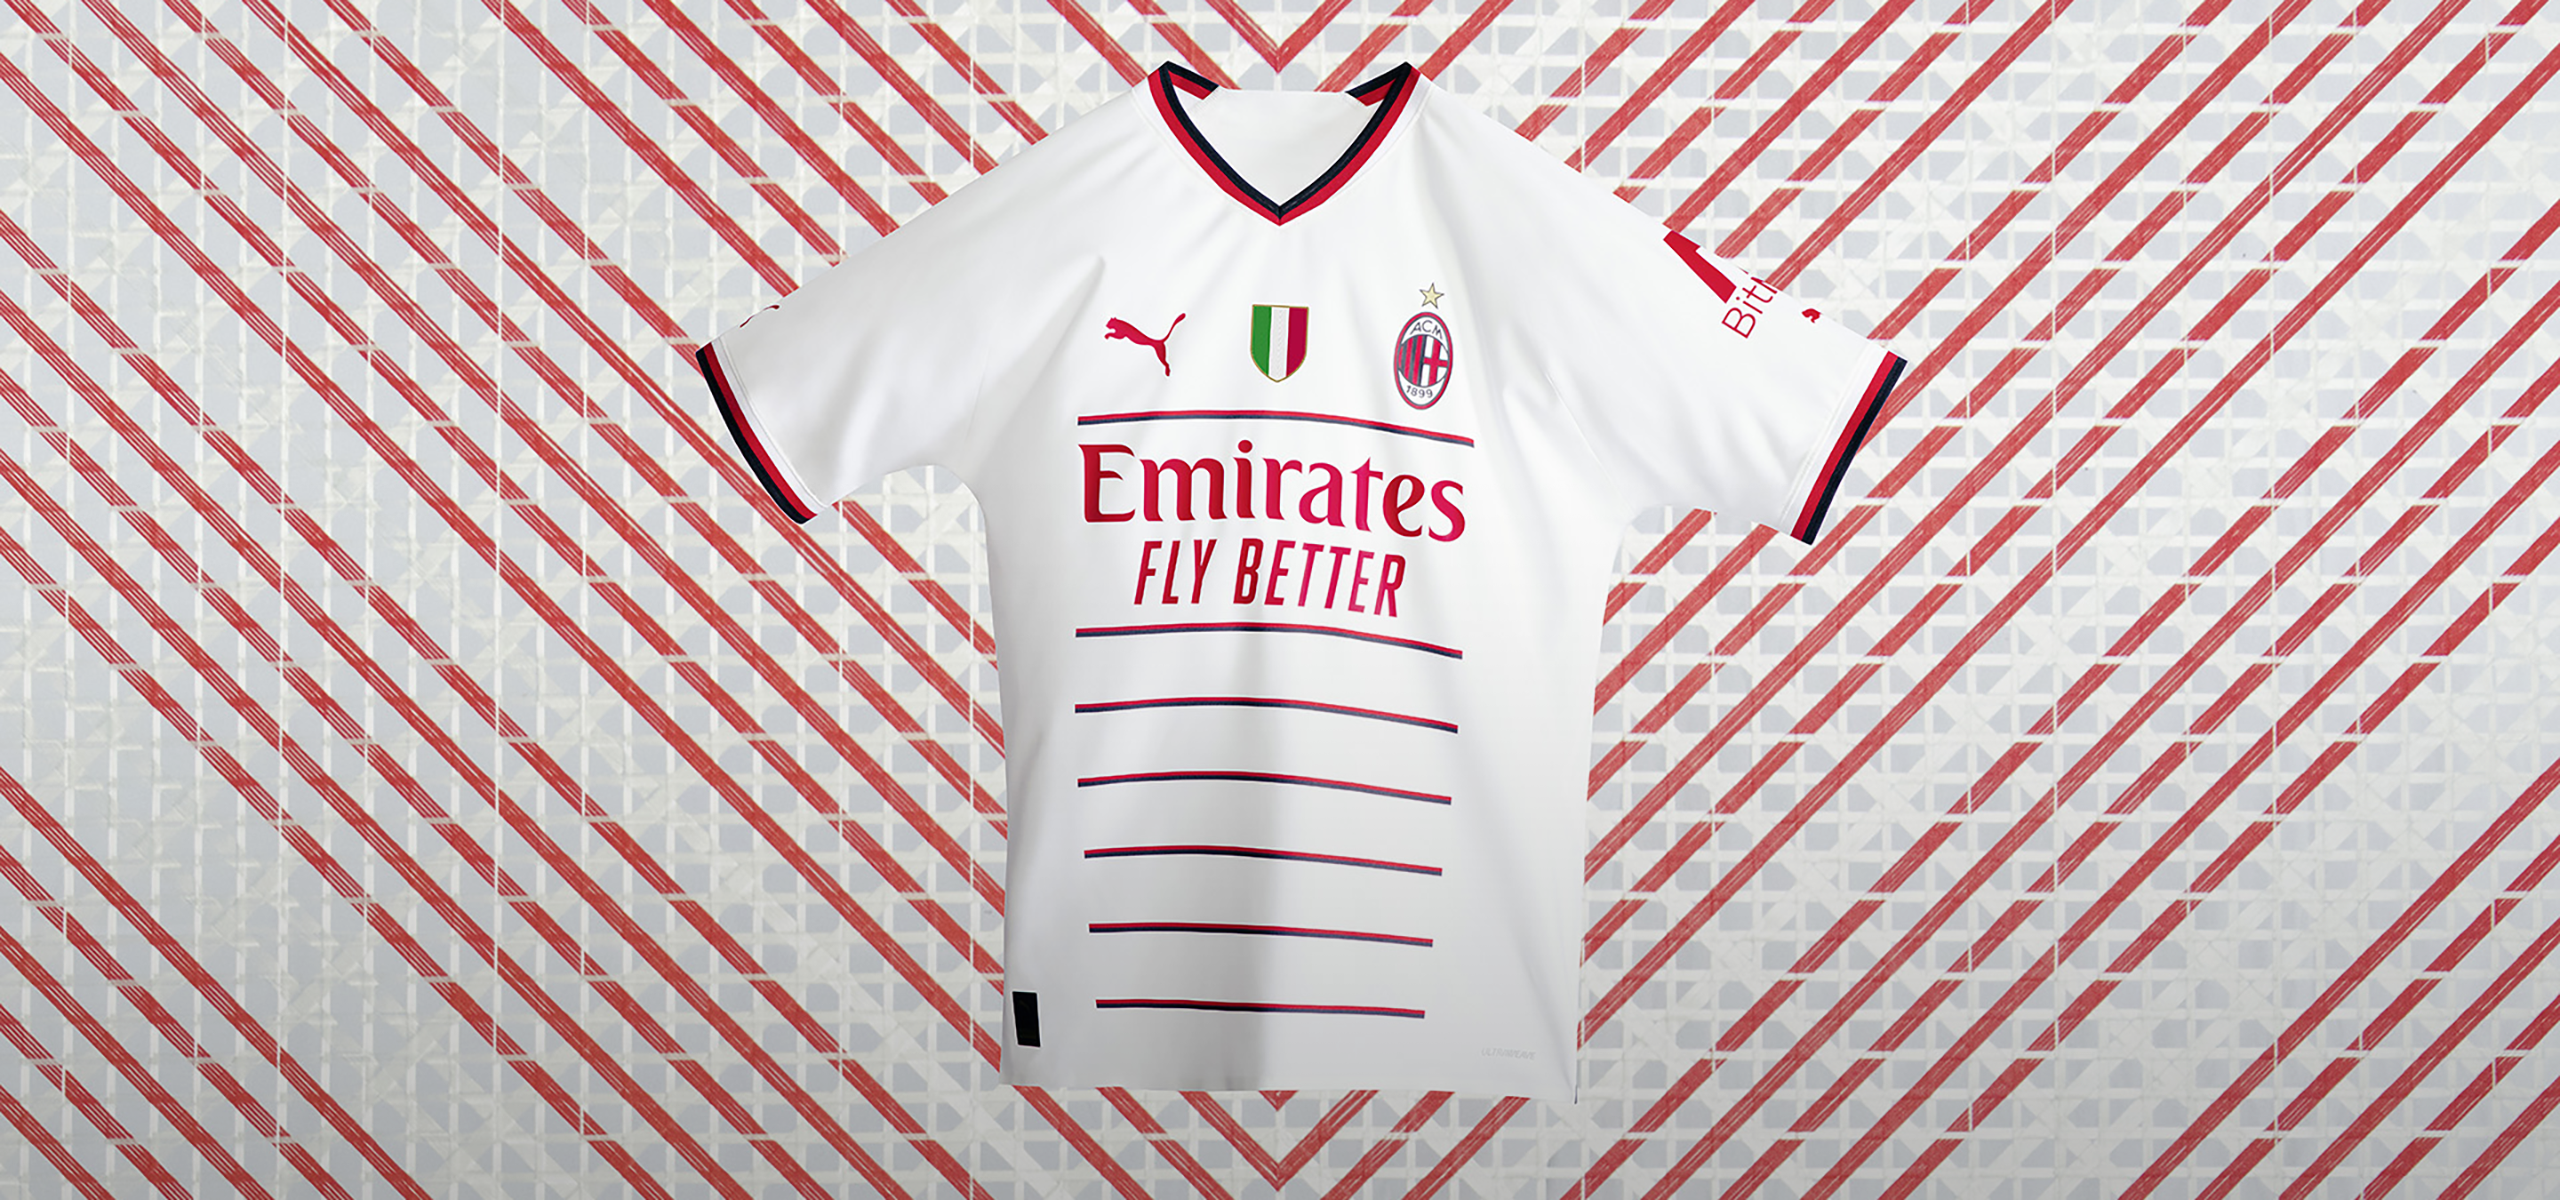 Official: AC Milan unveil new away kit for the 2023-24 season - photos